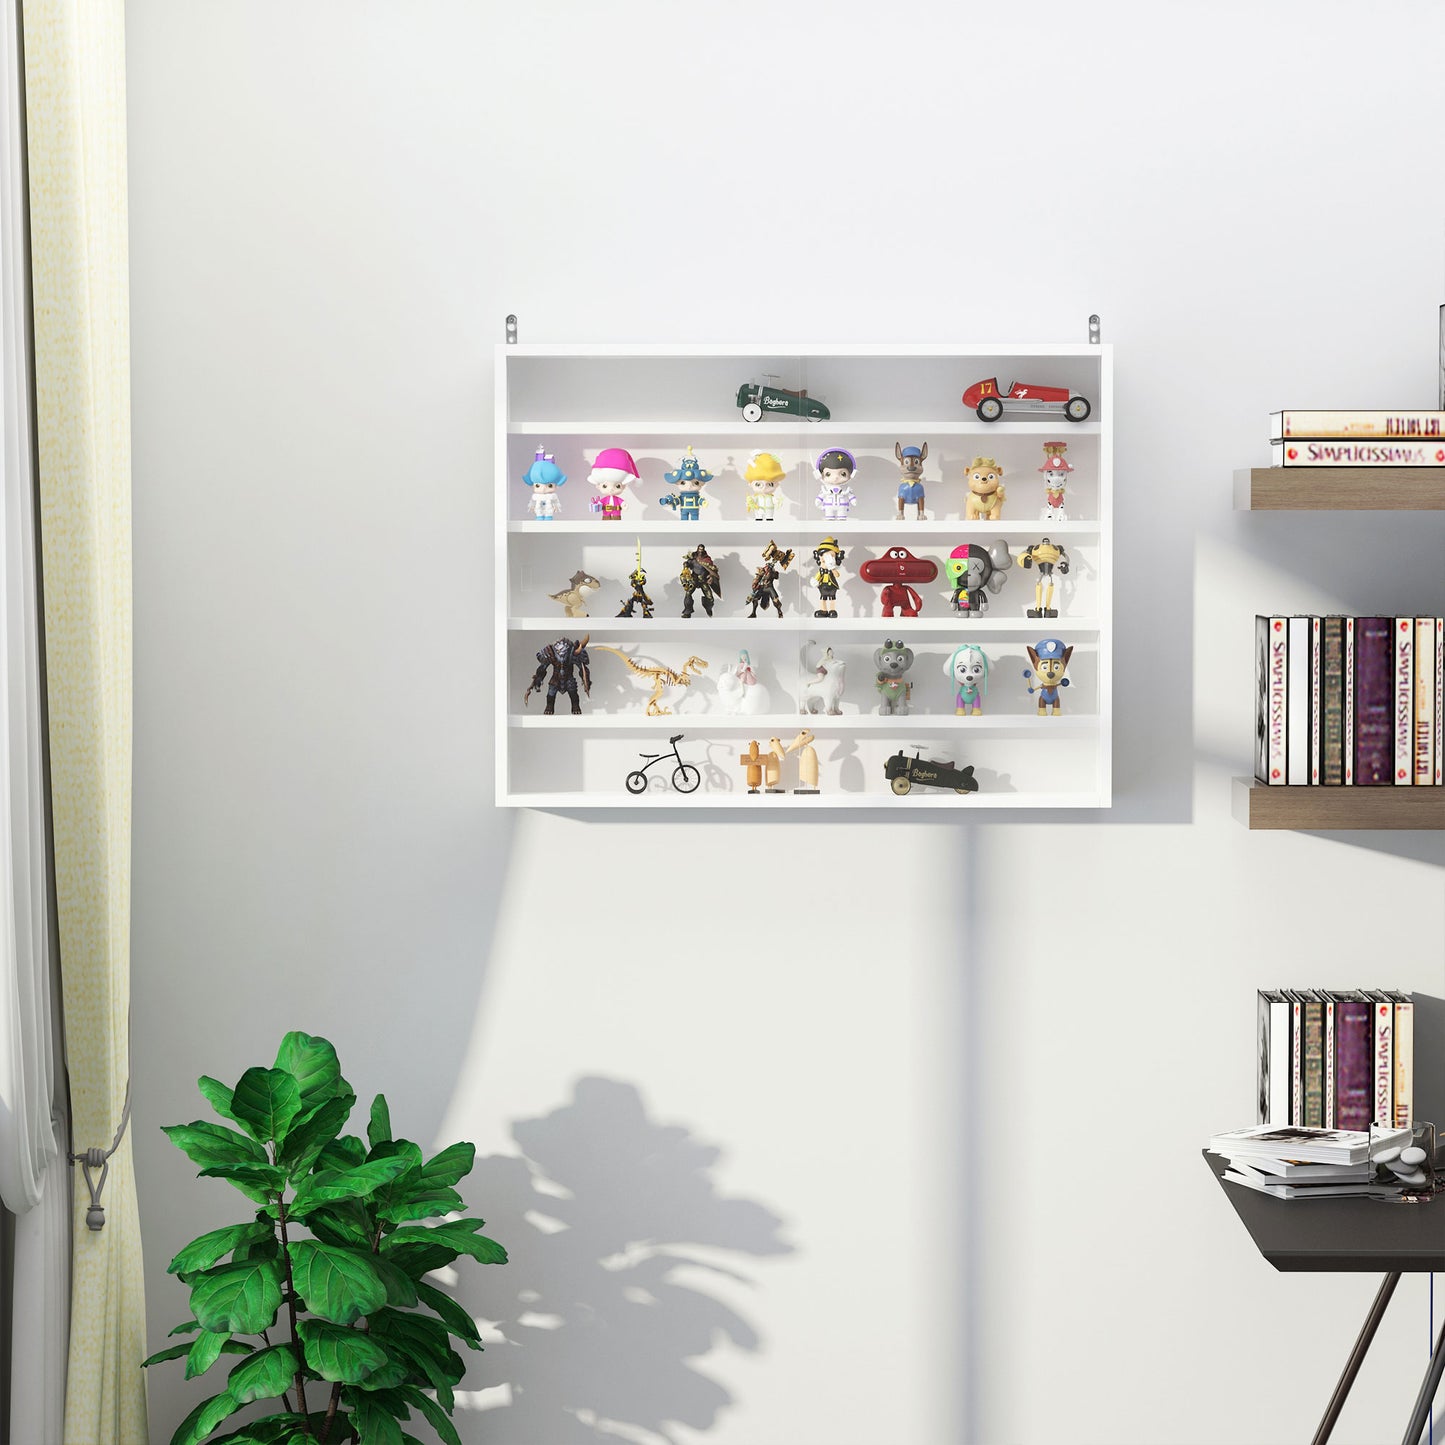 HOMCOM 5-Tier Wall Display Shelf Unit Cabinet w/ Adjustable Shelves Glass Doors White